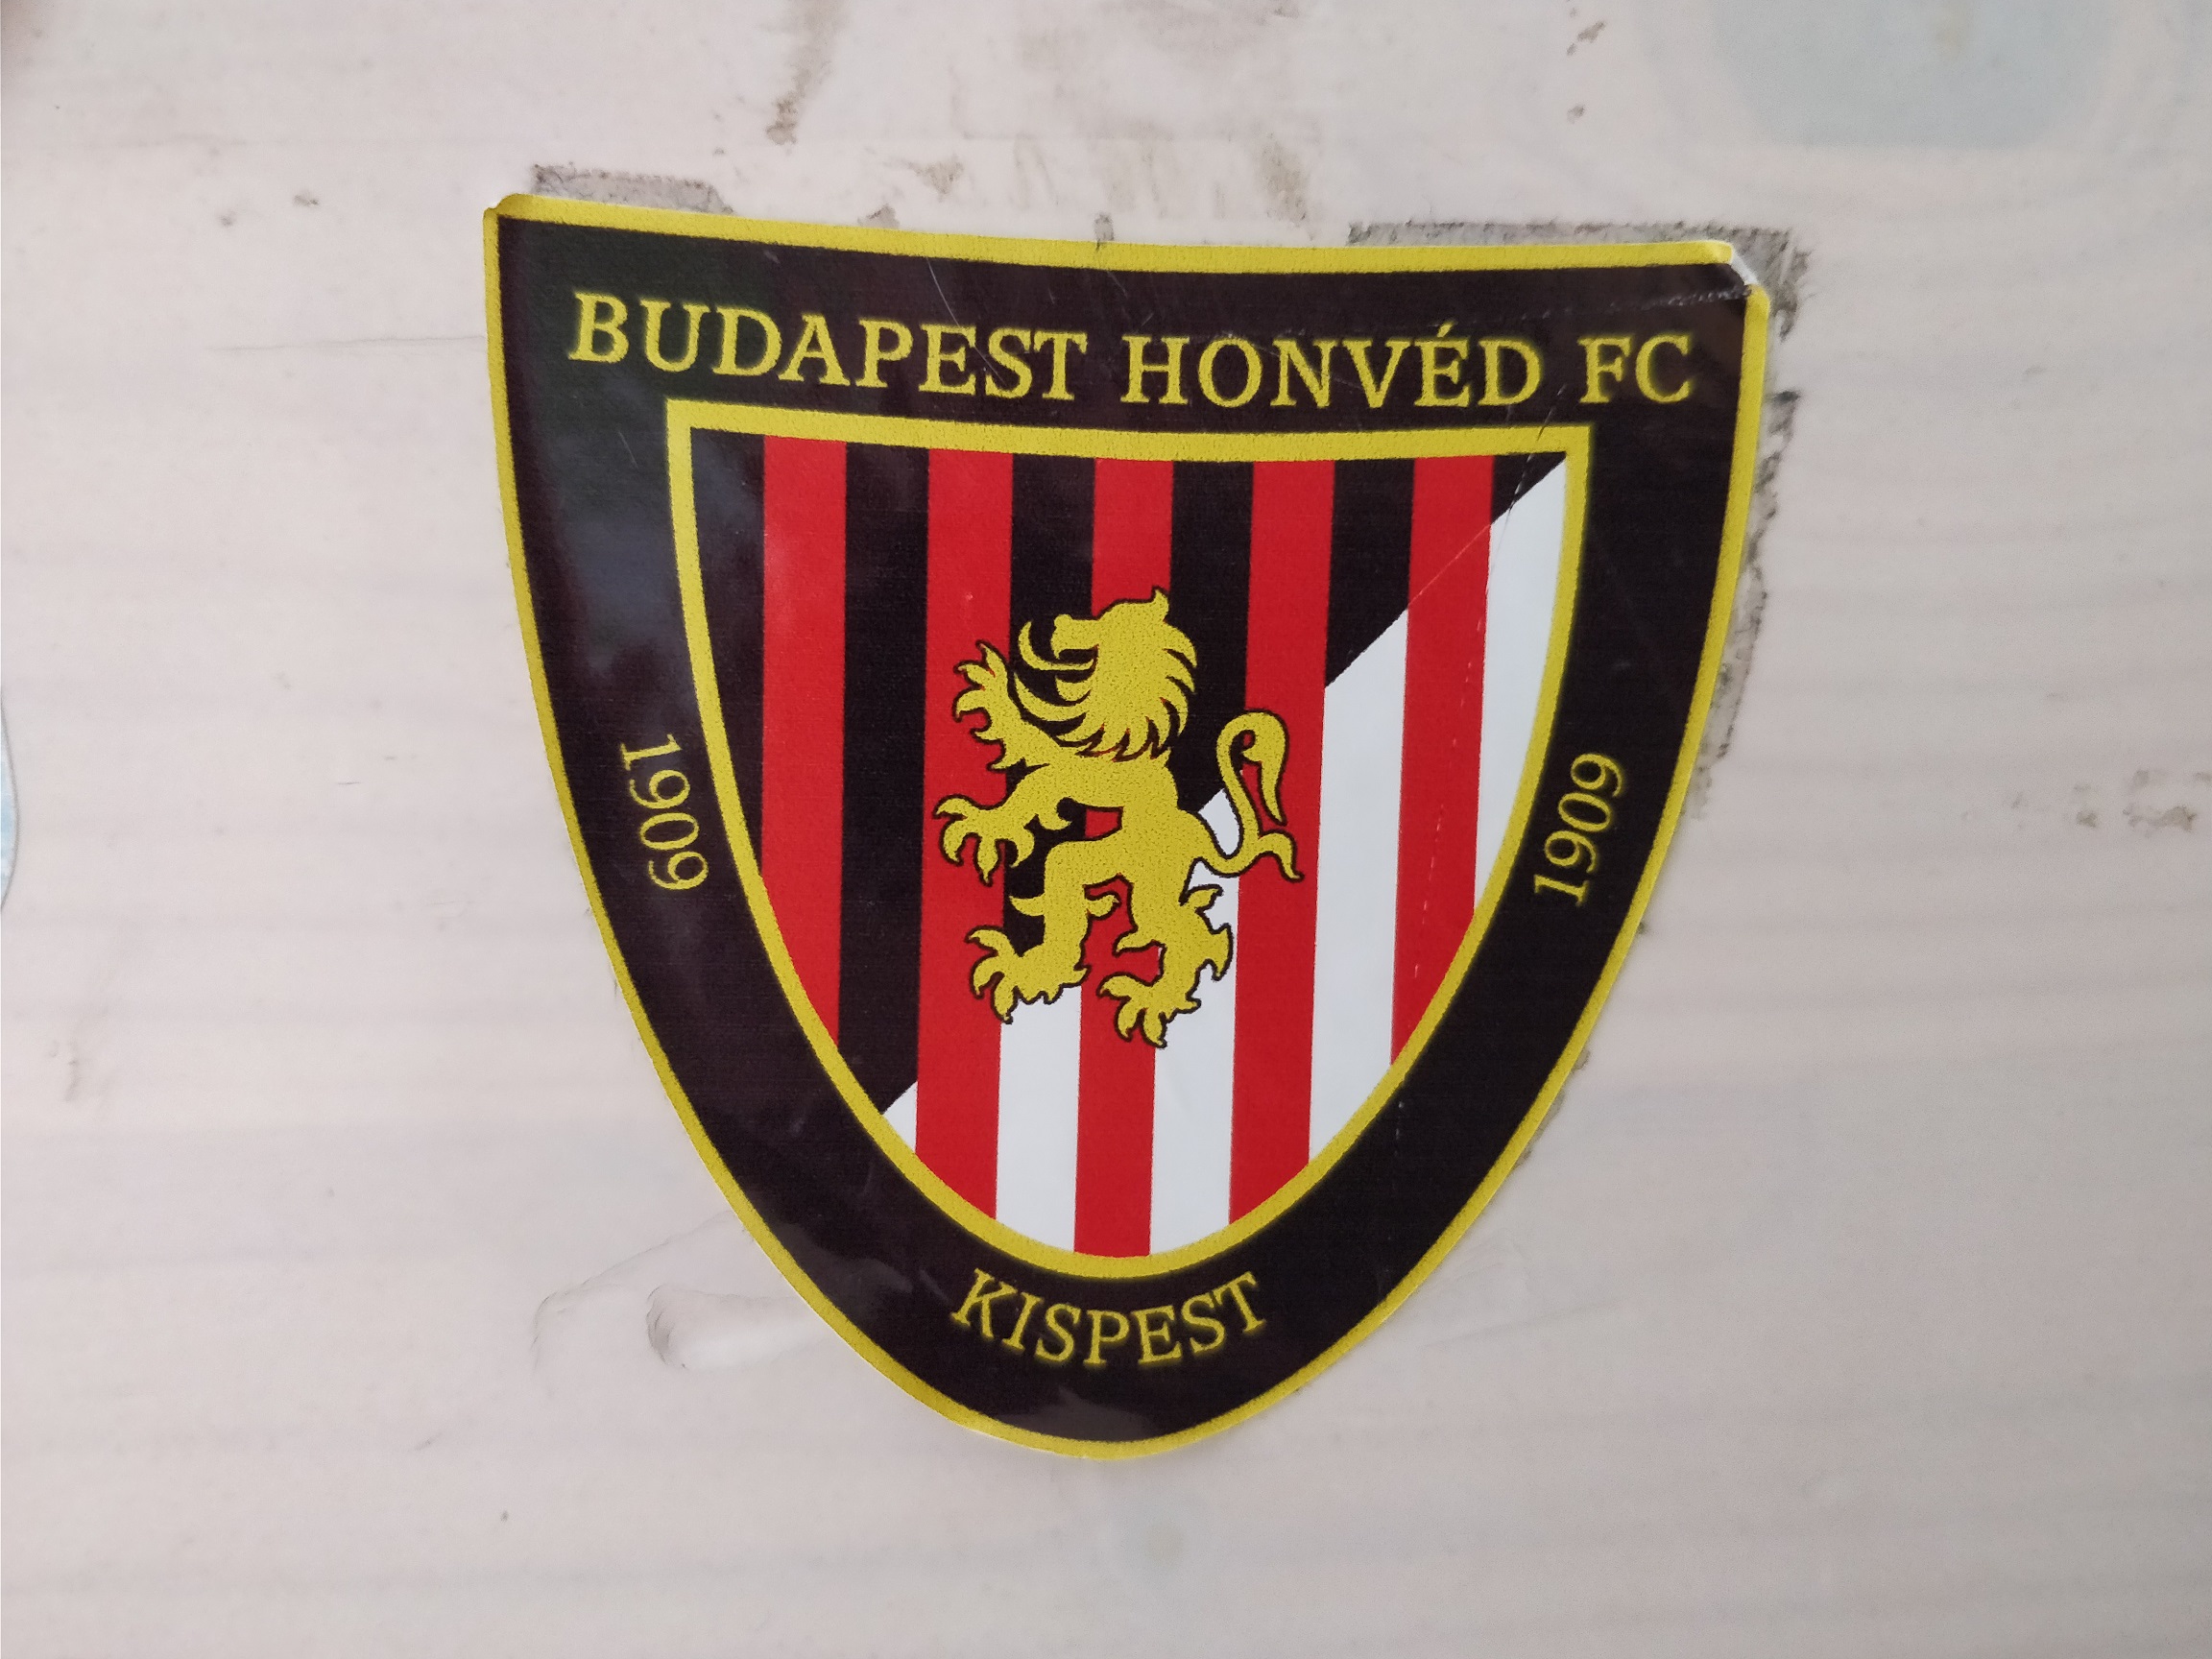 Bern, Wohnung, Bett, Honved, Honvéd, Budapest Honvéd FC, Honved Budapest, Fussball, #StickerLogoElfsport